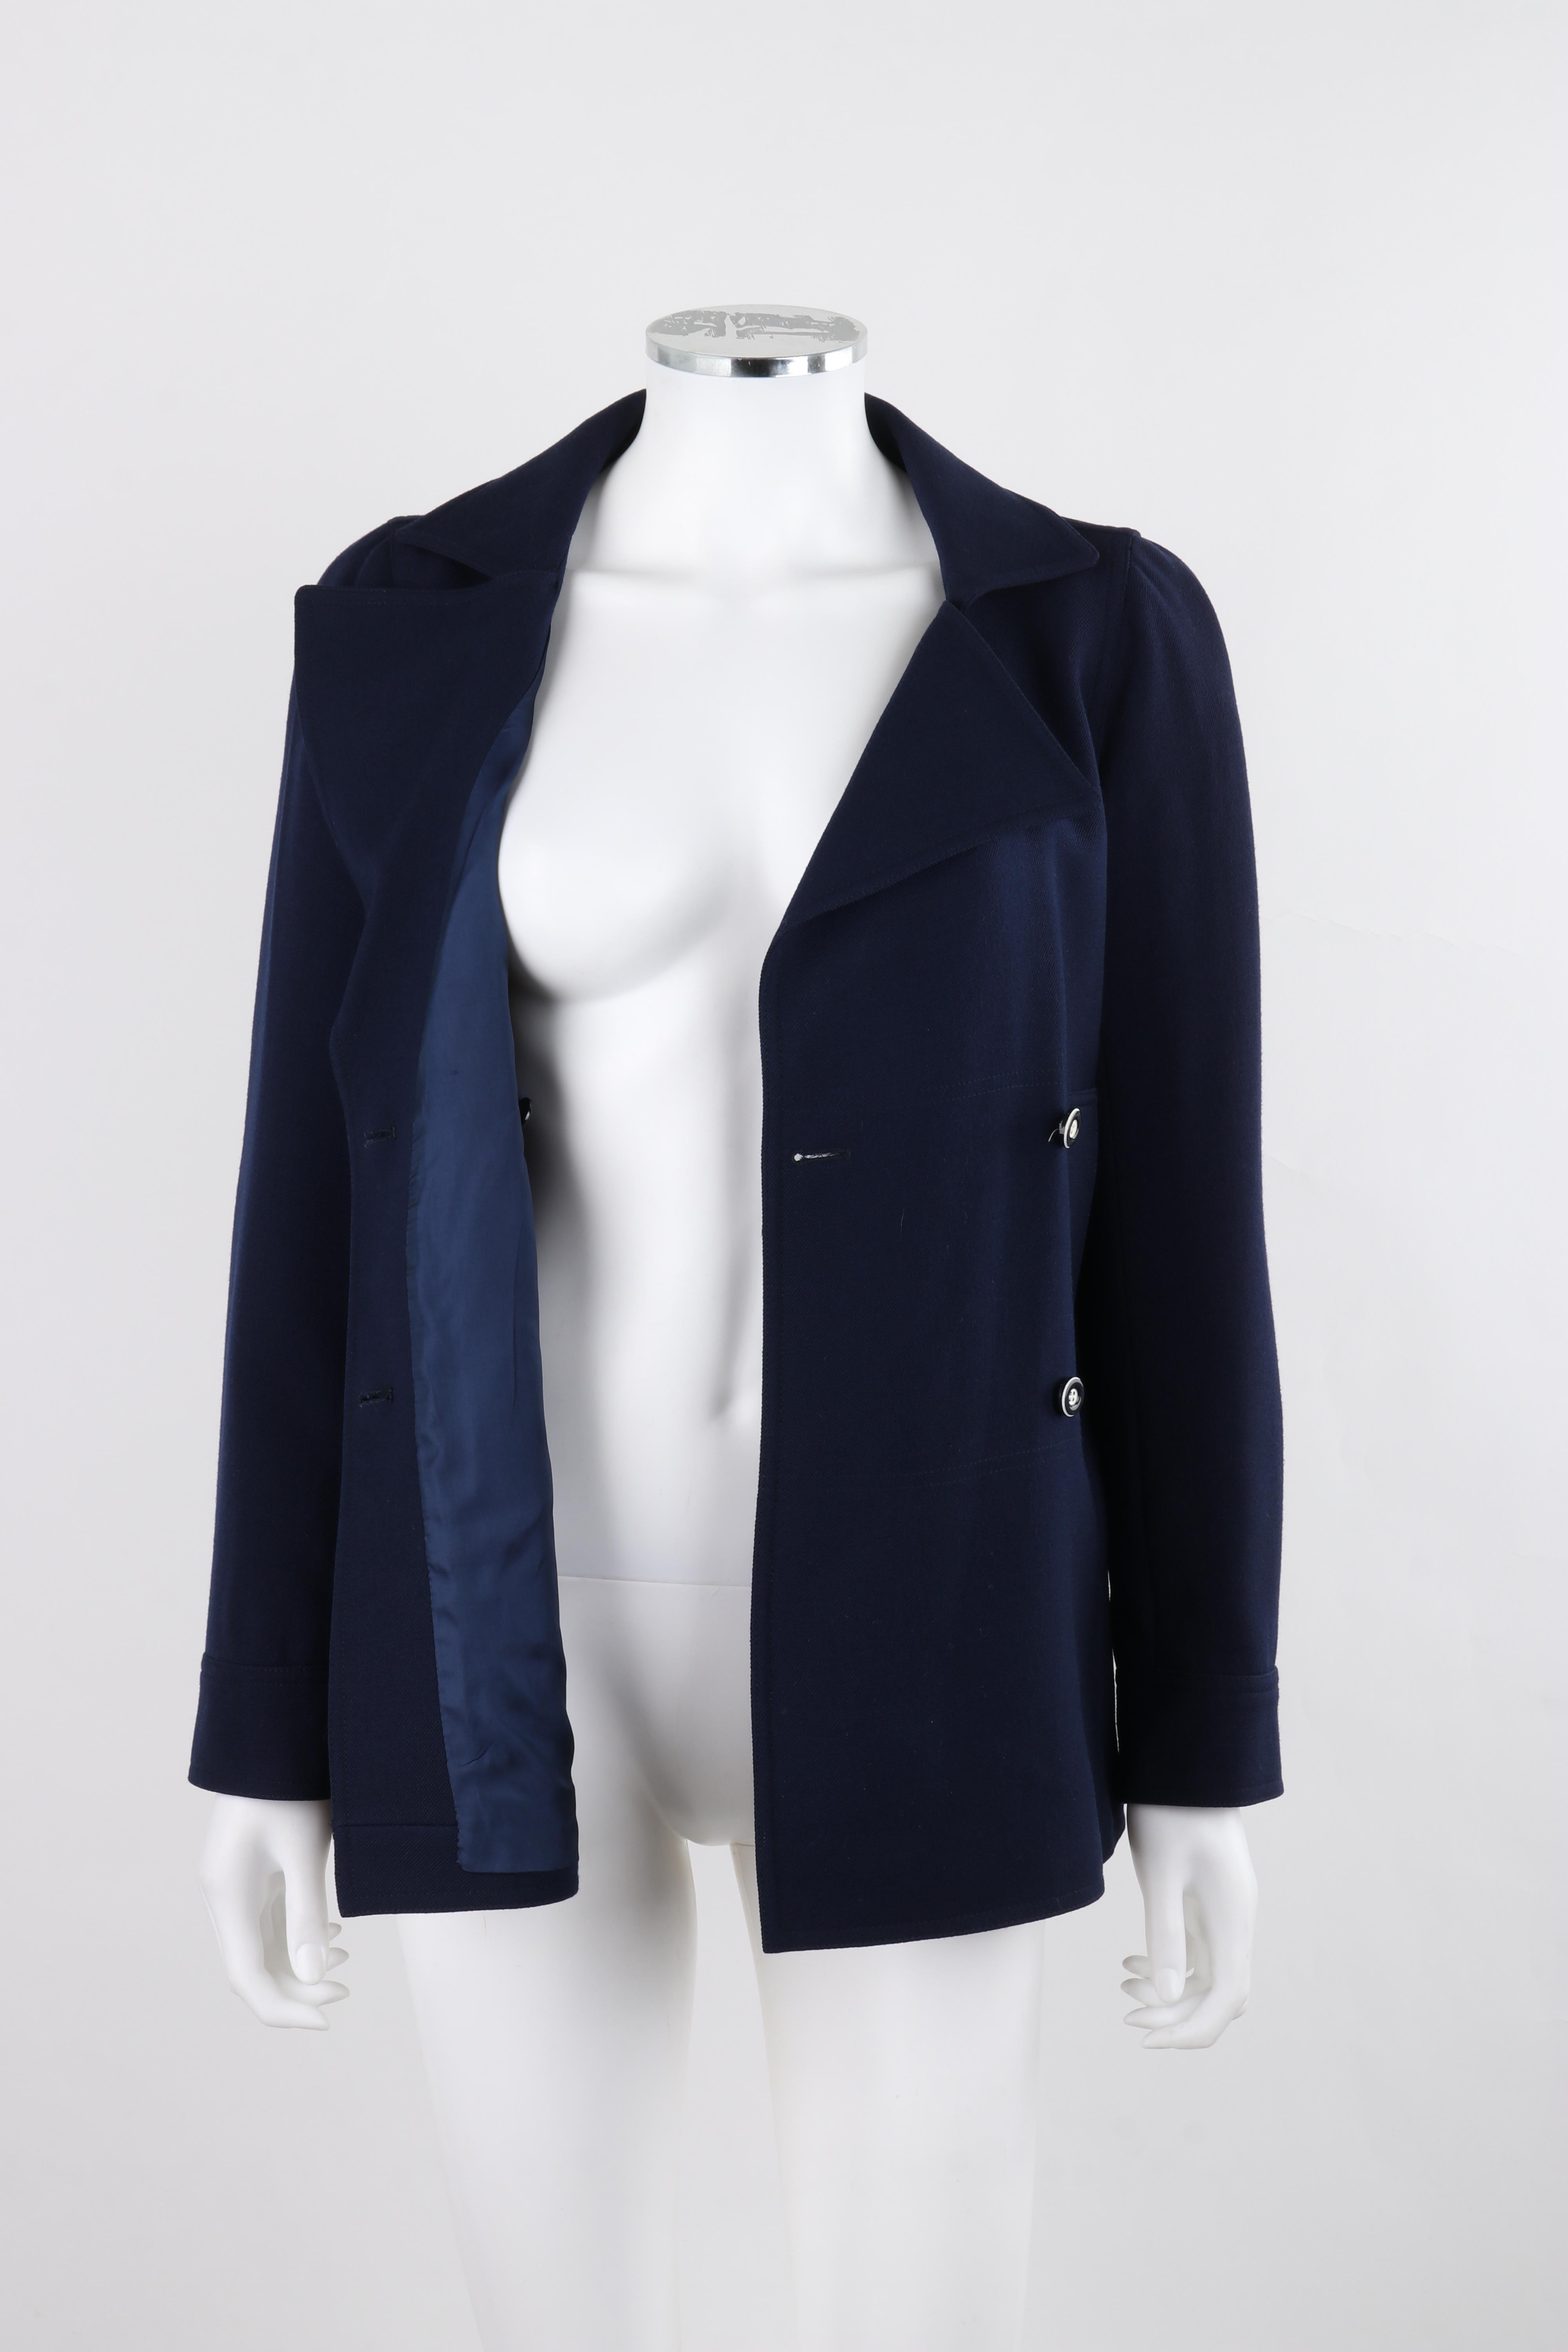 COURREGES PARIS c.1970's Vtg Navy Blue Wool Double Breasted Blazer Jacket  For Sale 5